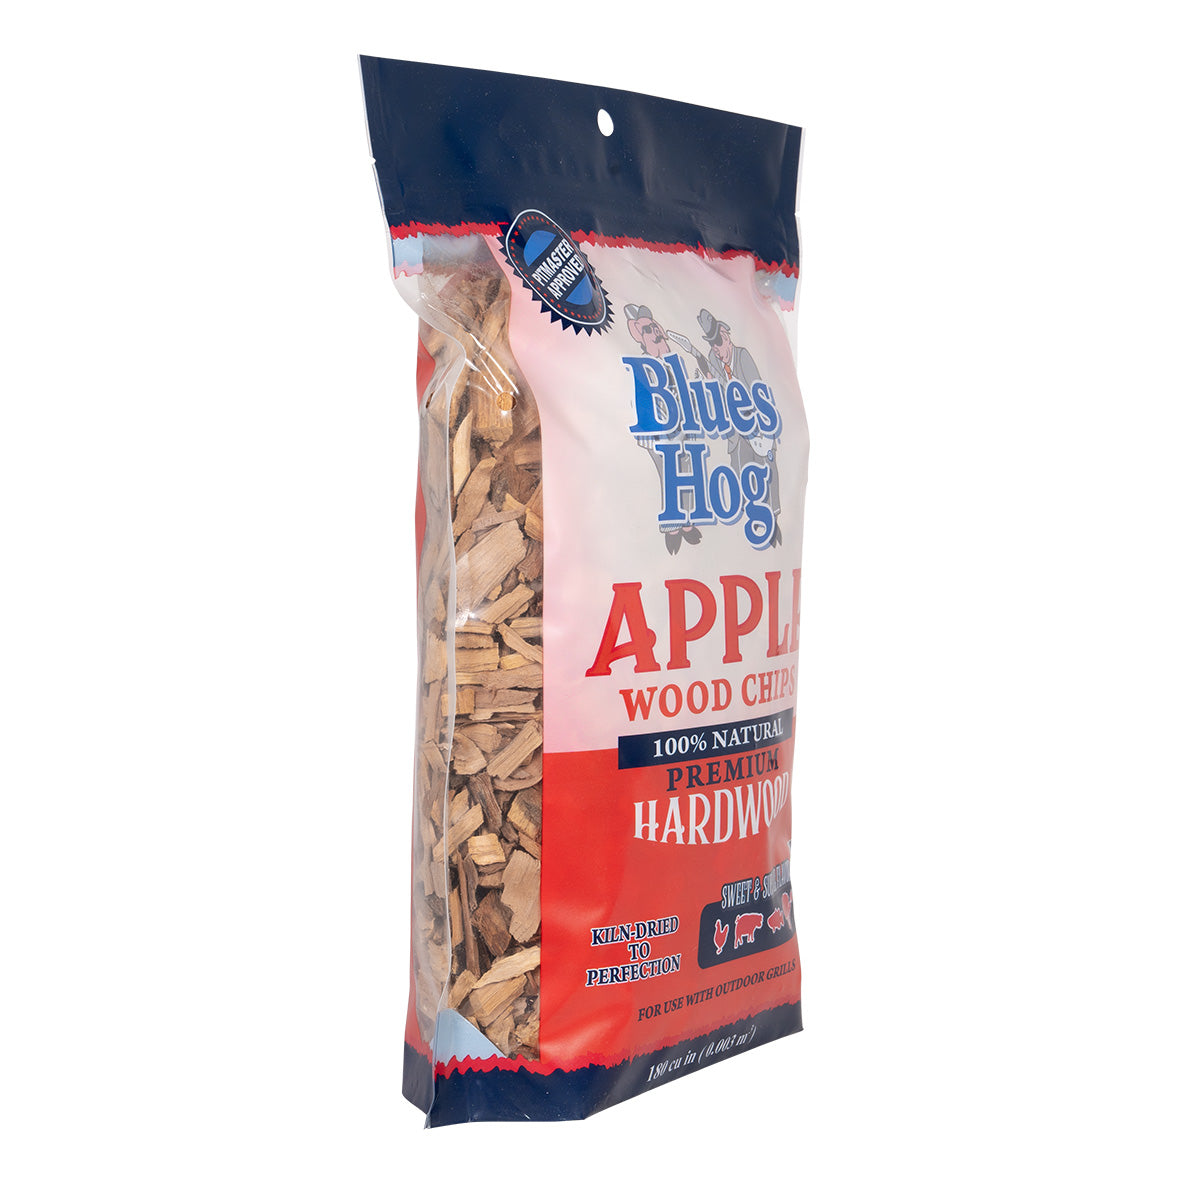 
                  
                    Apple Wood Chips
                  
                